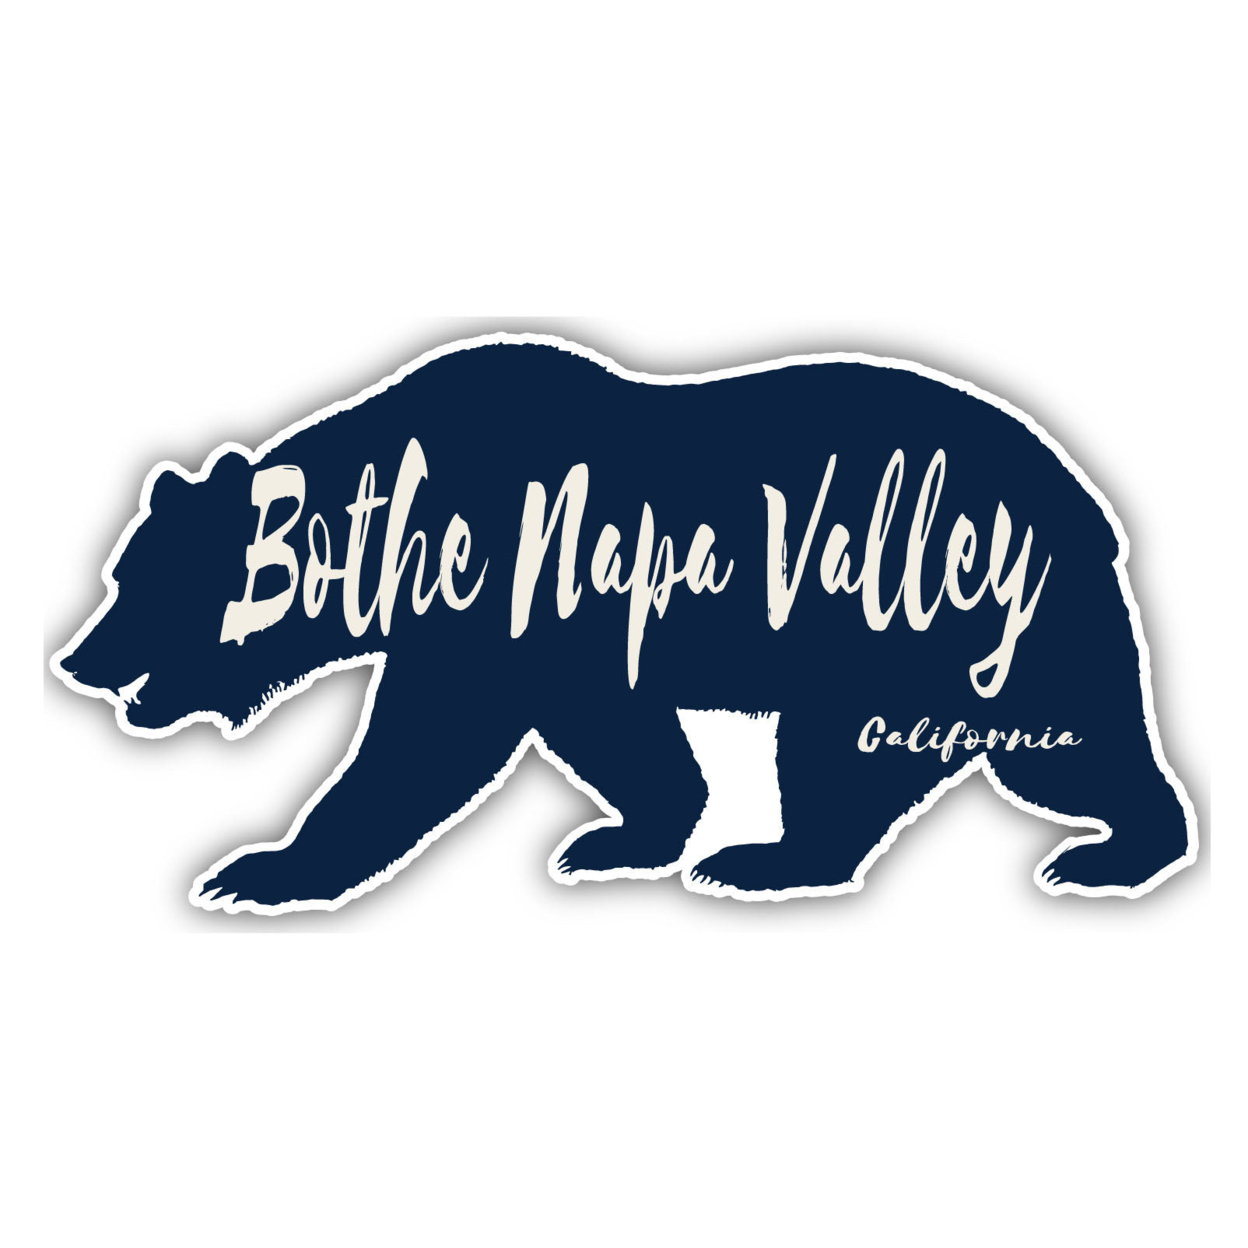 Bothe Napa Valley California Souvenir Decorative Stickers (Choose Theme And Size) - Single Unit, 10-Inch, Bear